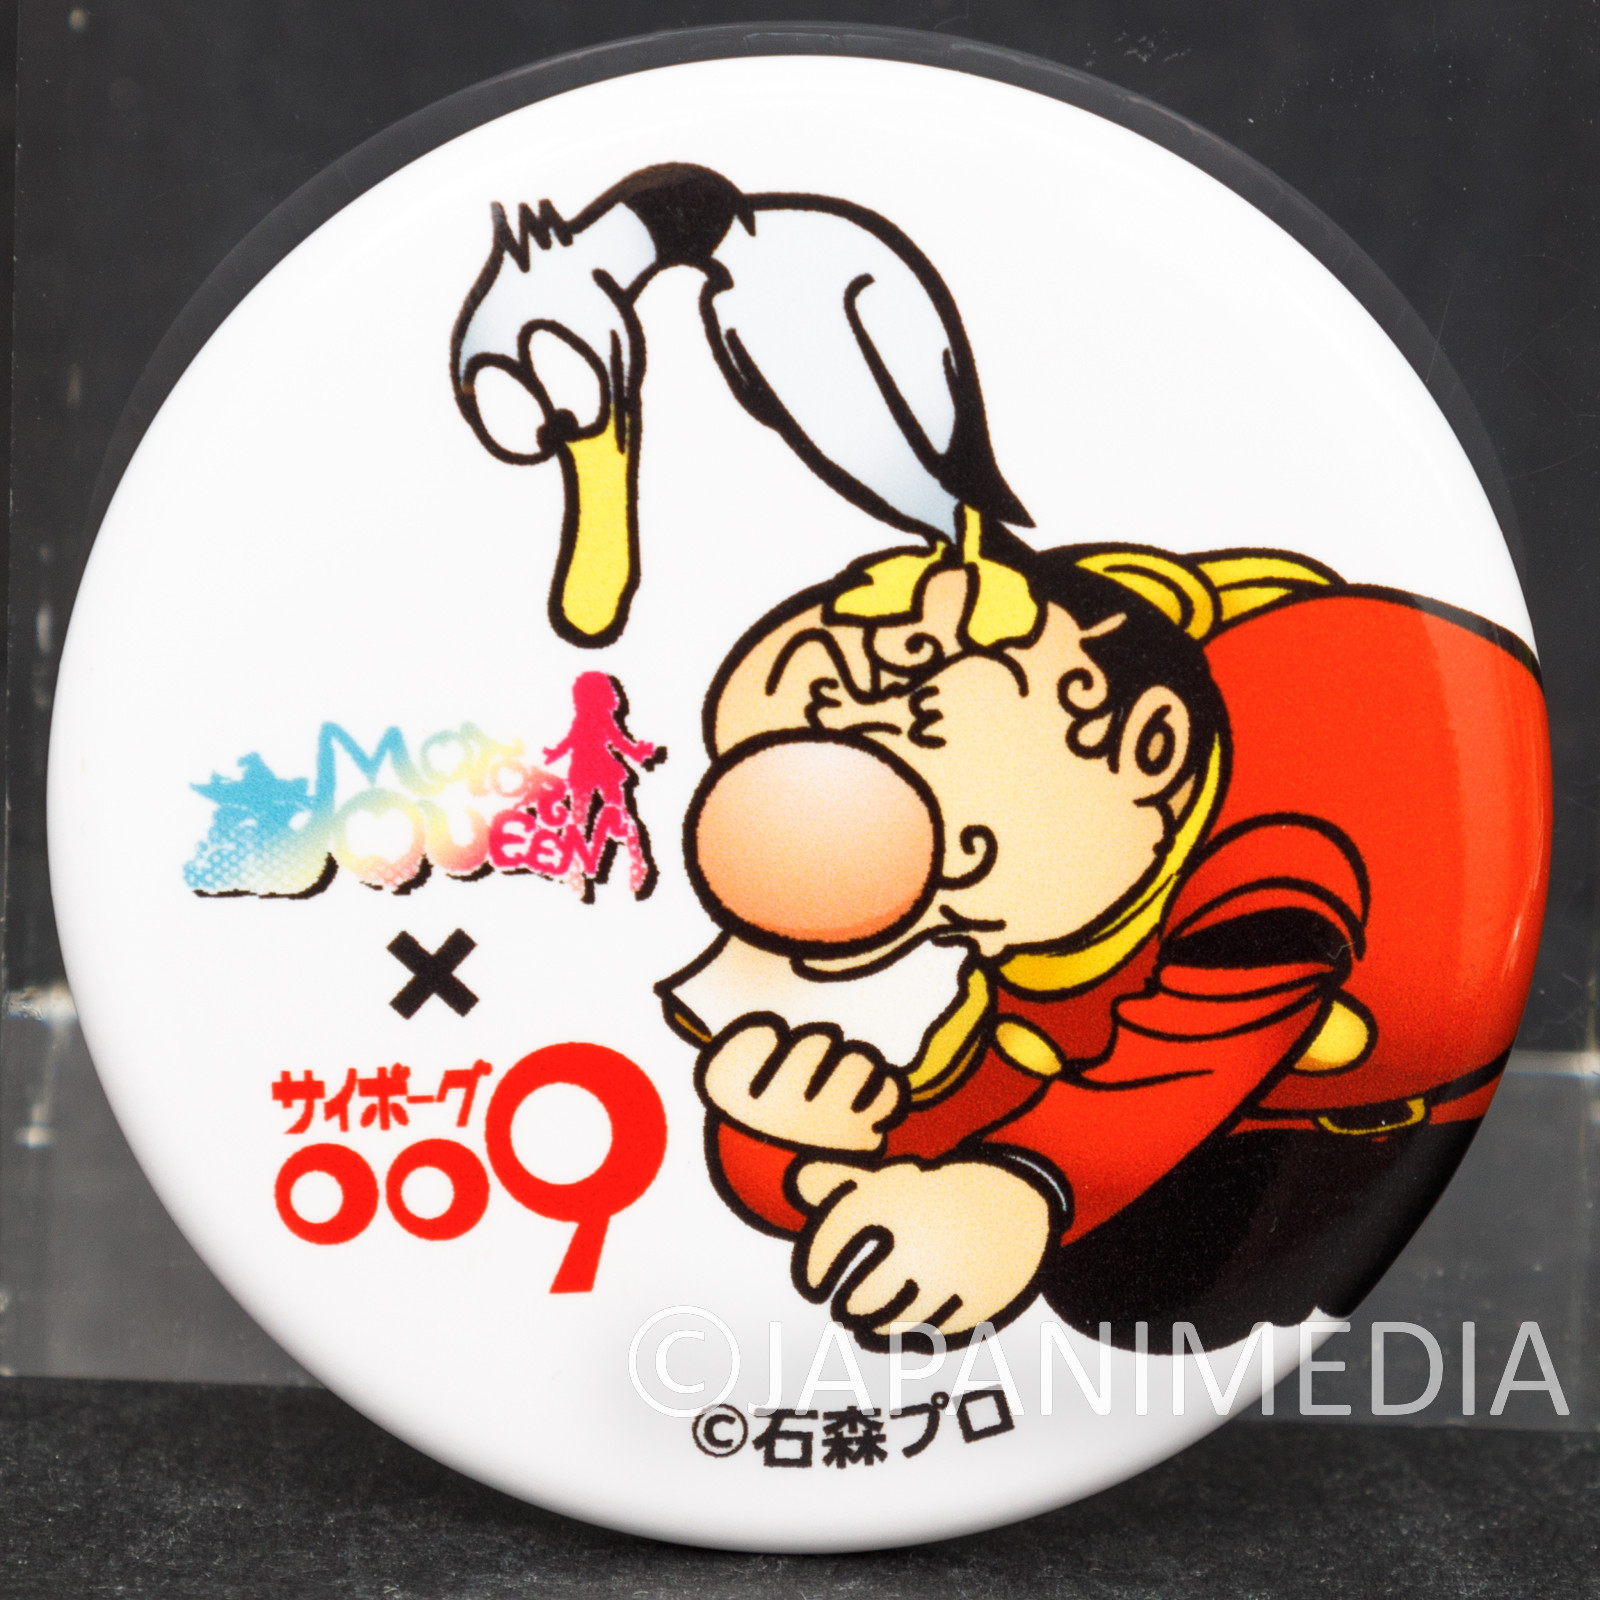 Cyborg 009 Button Can Badge 9pc Set JAPAN ANIME